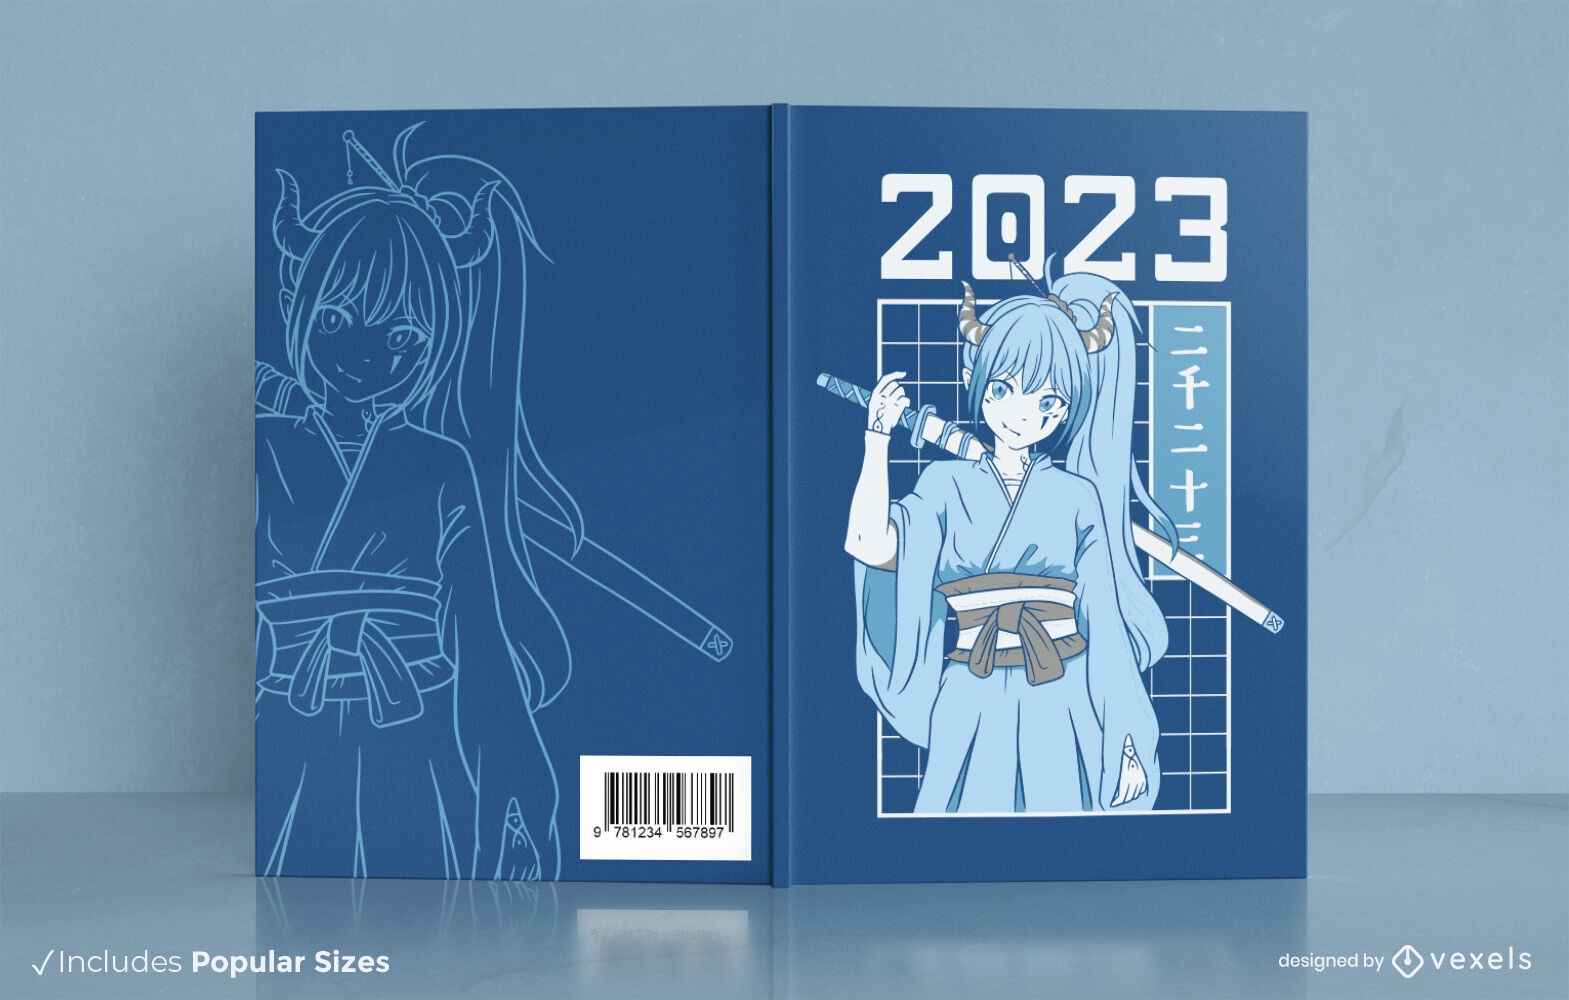 Kimi ni Todoke Fan Book + Anime Guide + Limited WORKS Book 3 Set Japanese  Manga | eBay